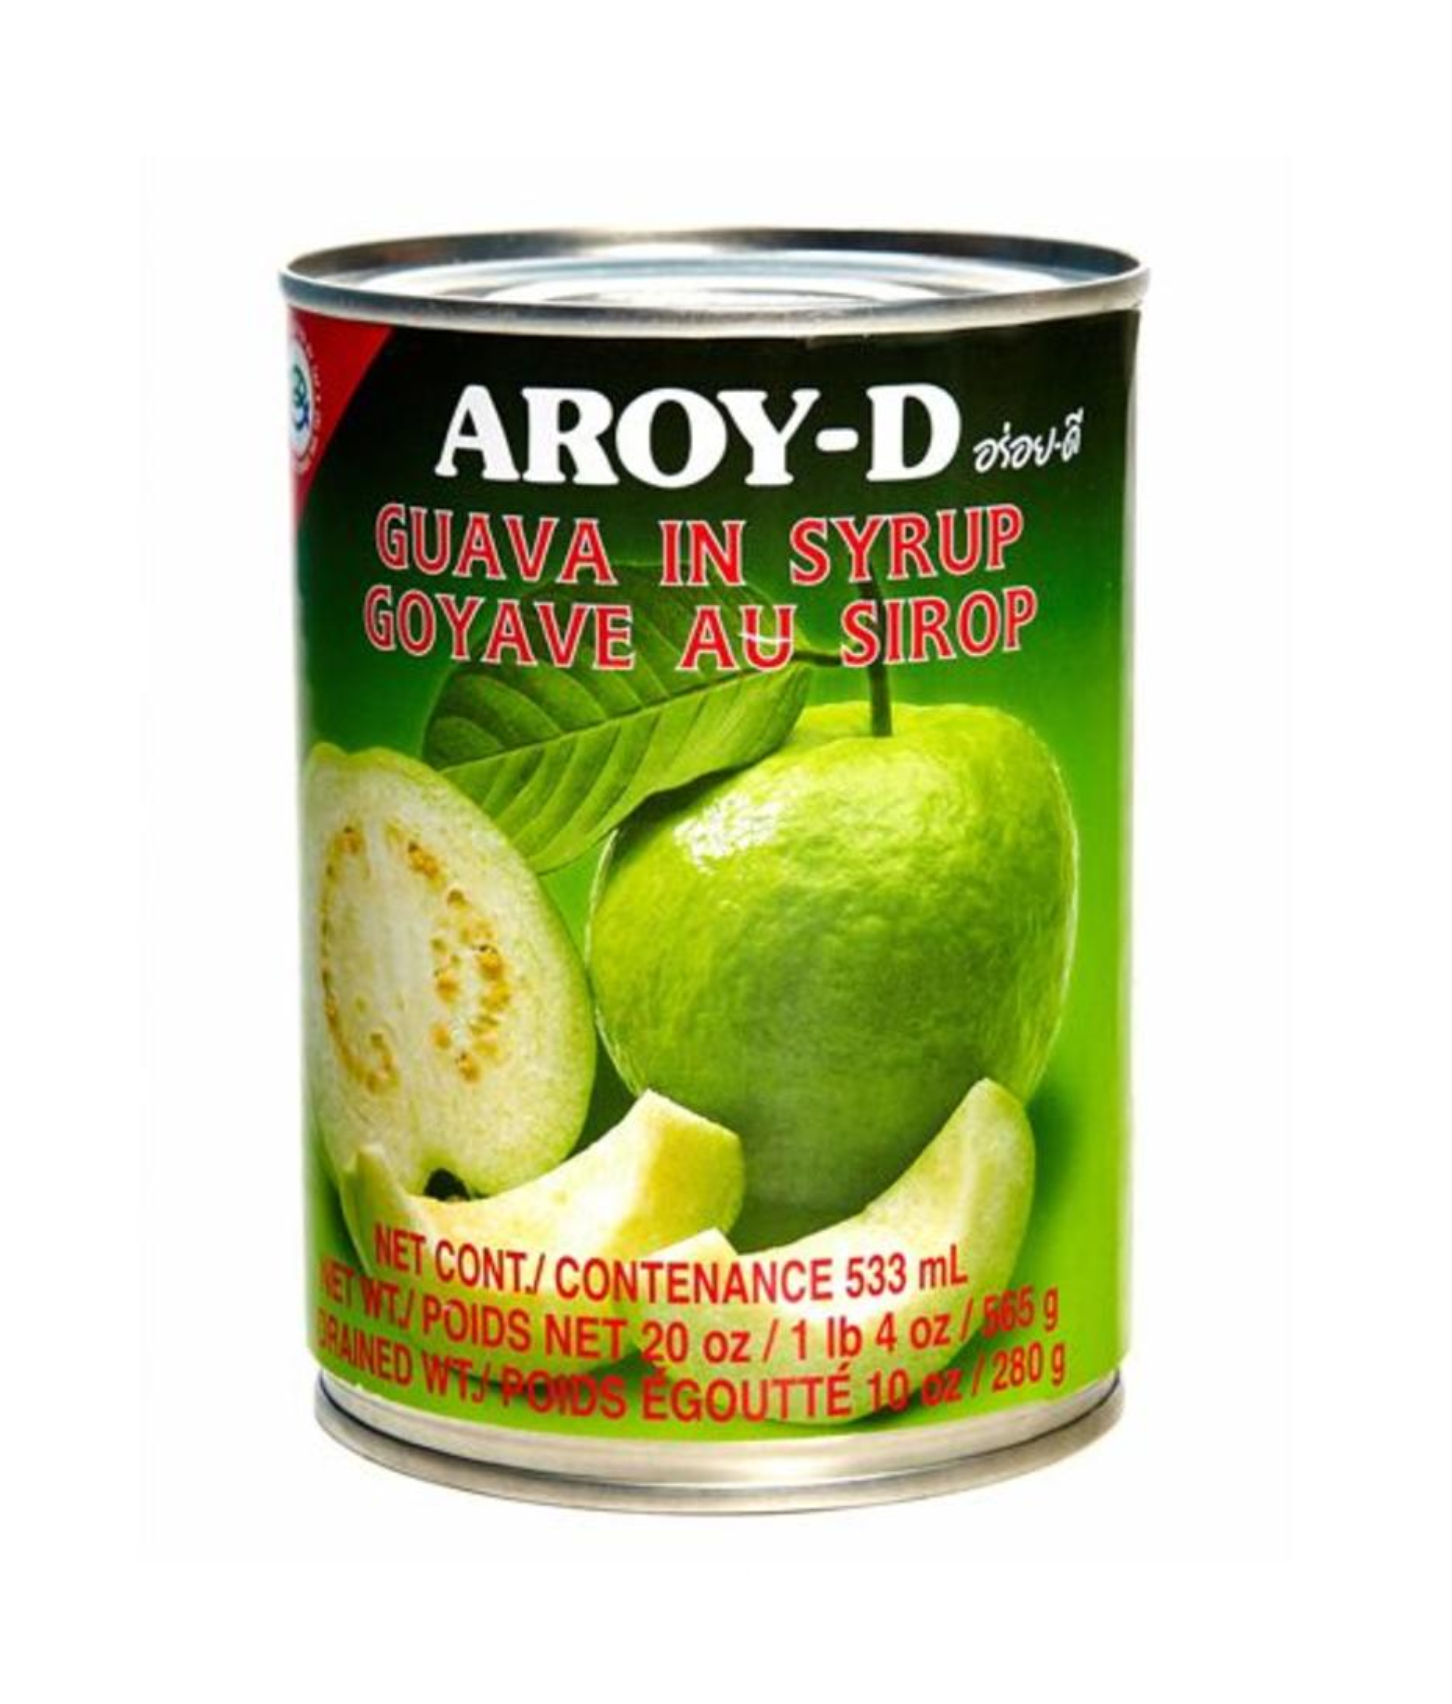 Aroy-D Guava in siroop